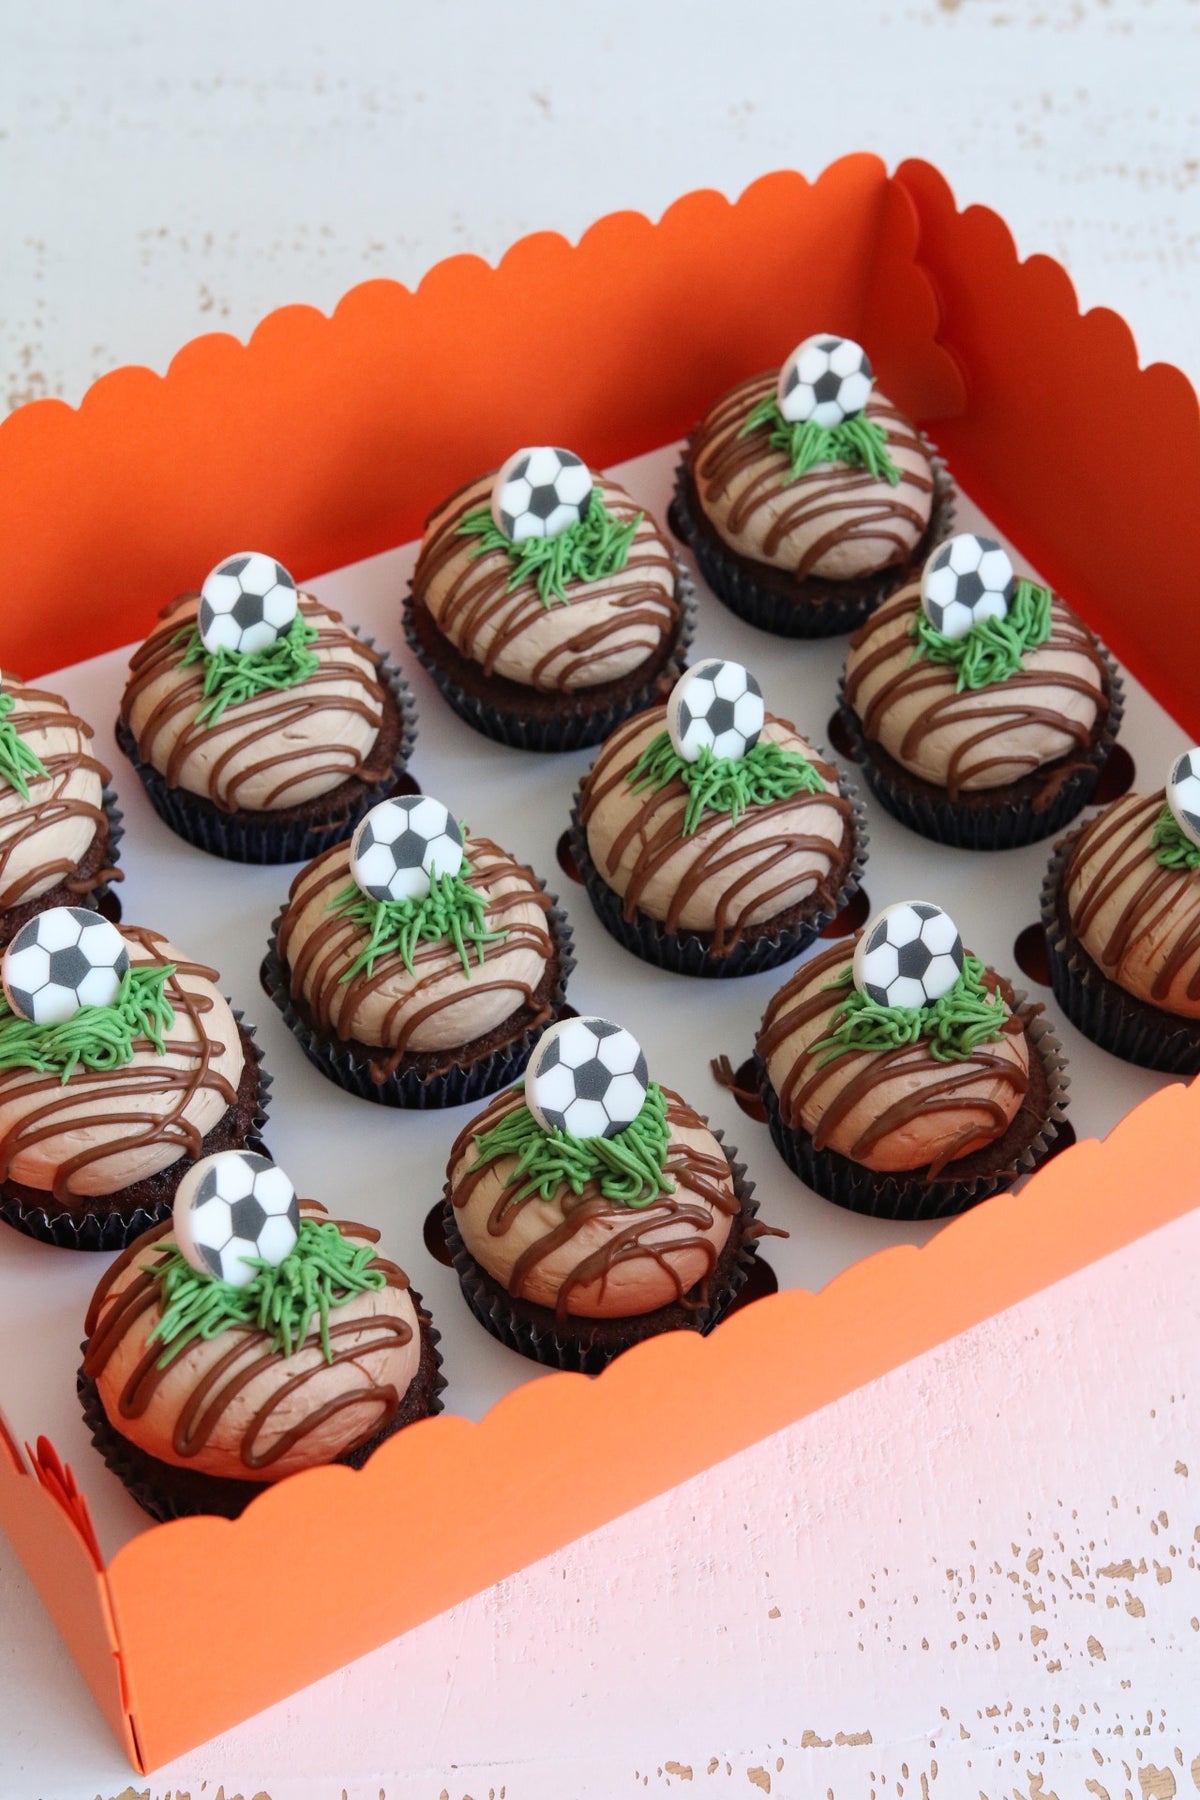 Box of Football Cupcakes